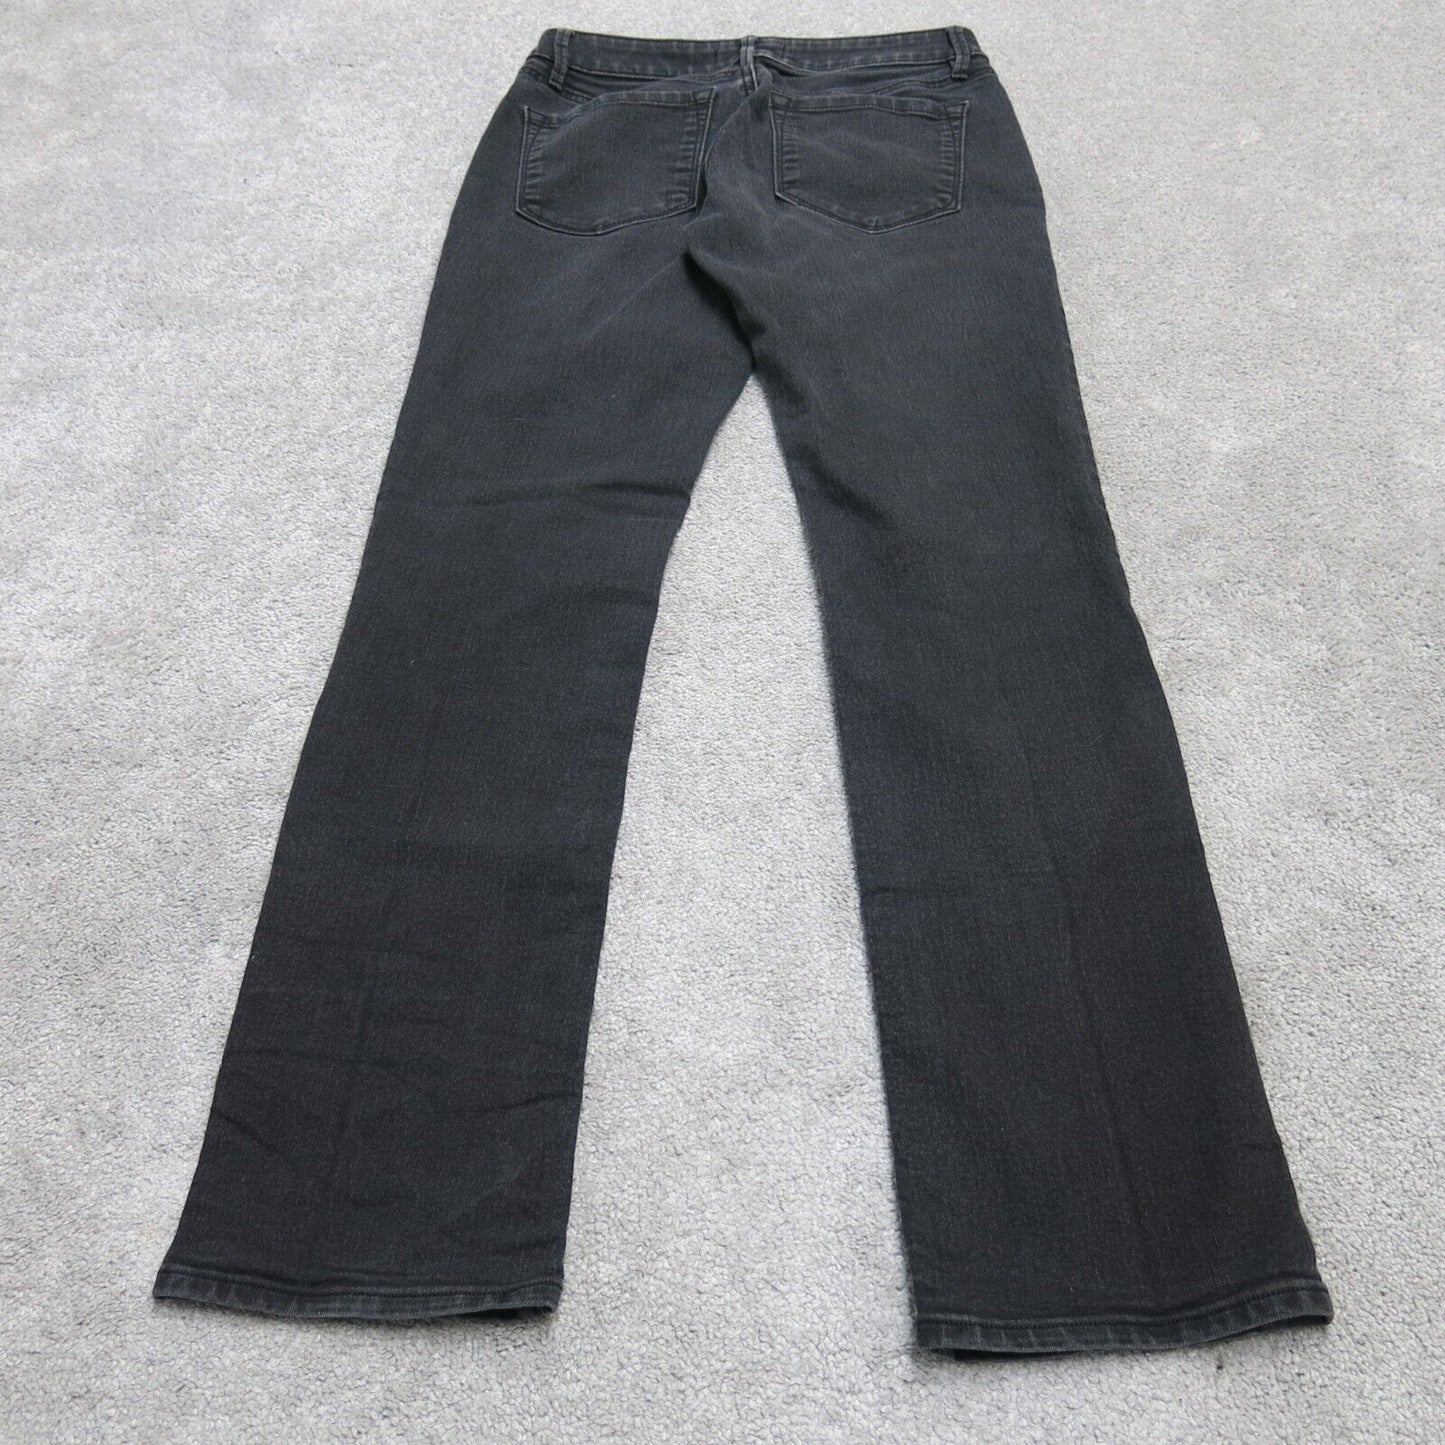 Vintage Womens Curvy Straight Leg Jeans Denim Stretch Low Rise Black Size 26/2